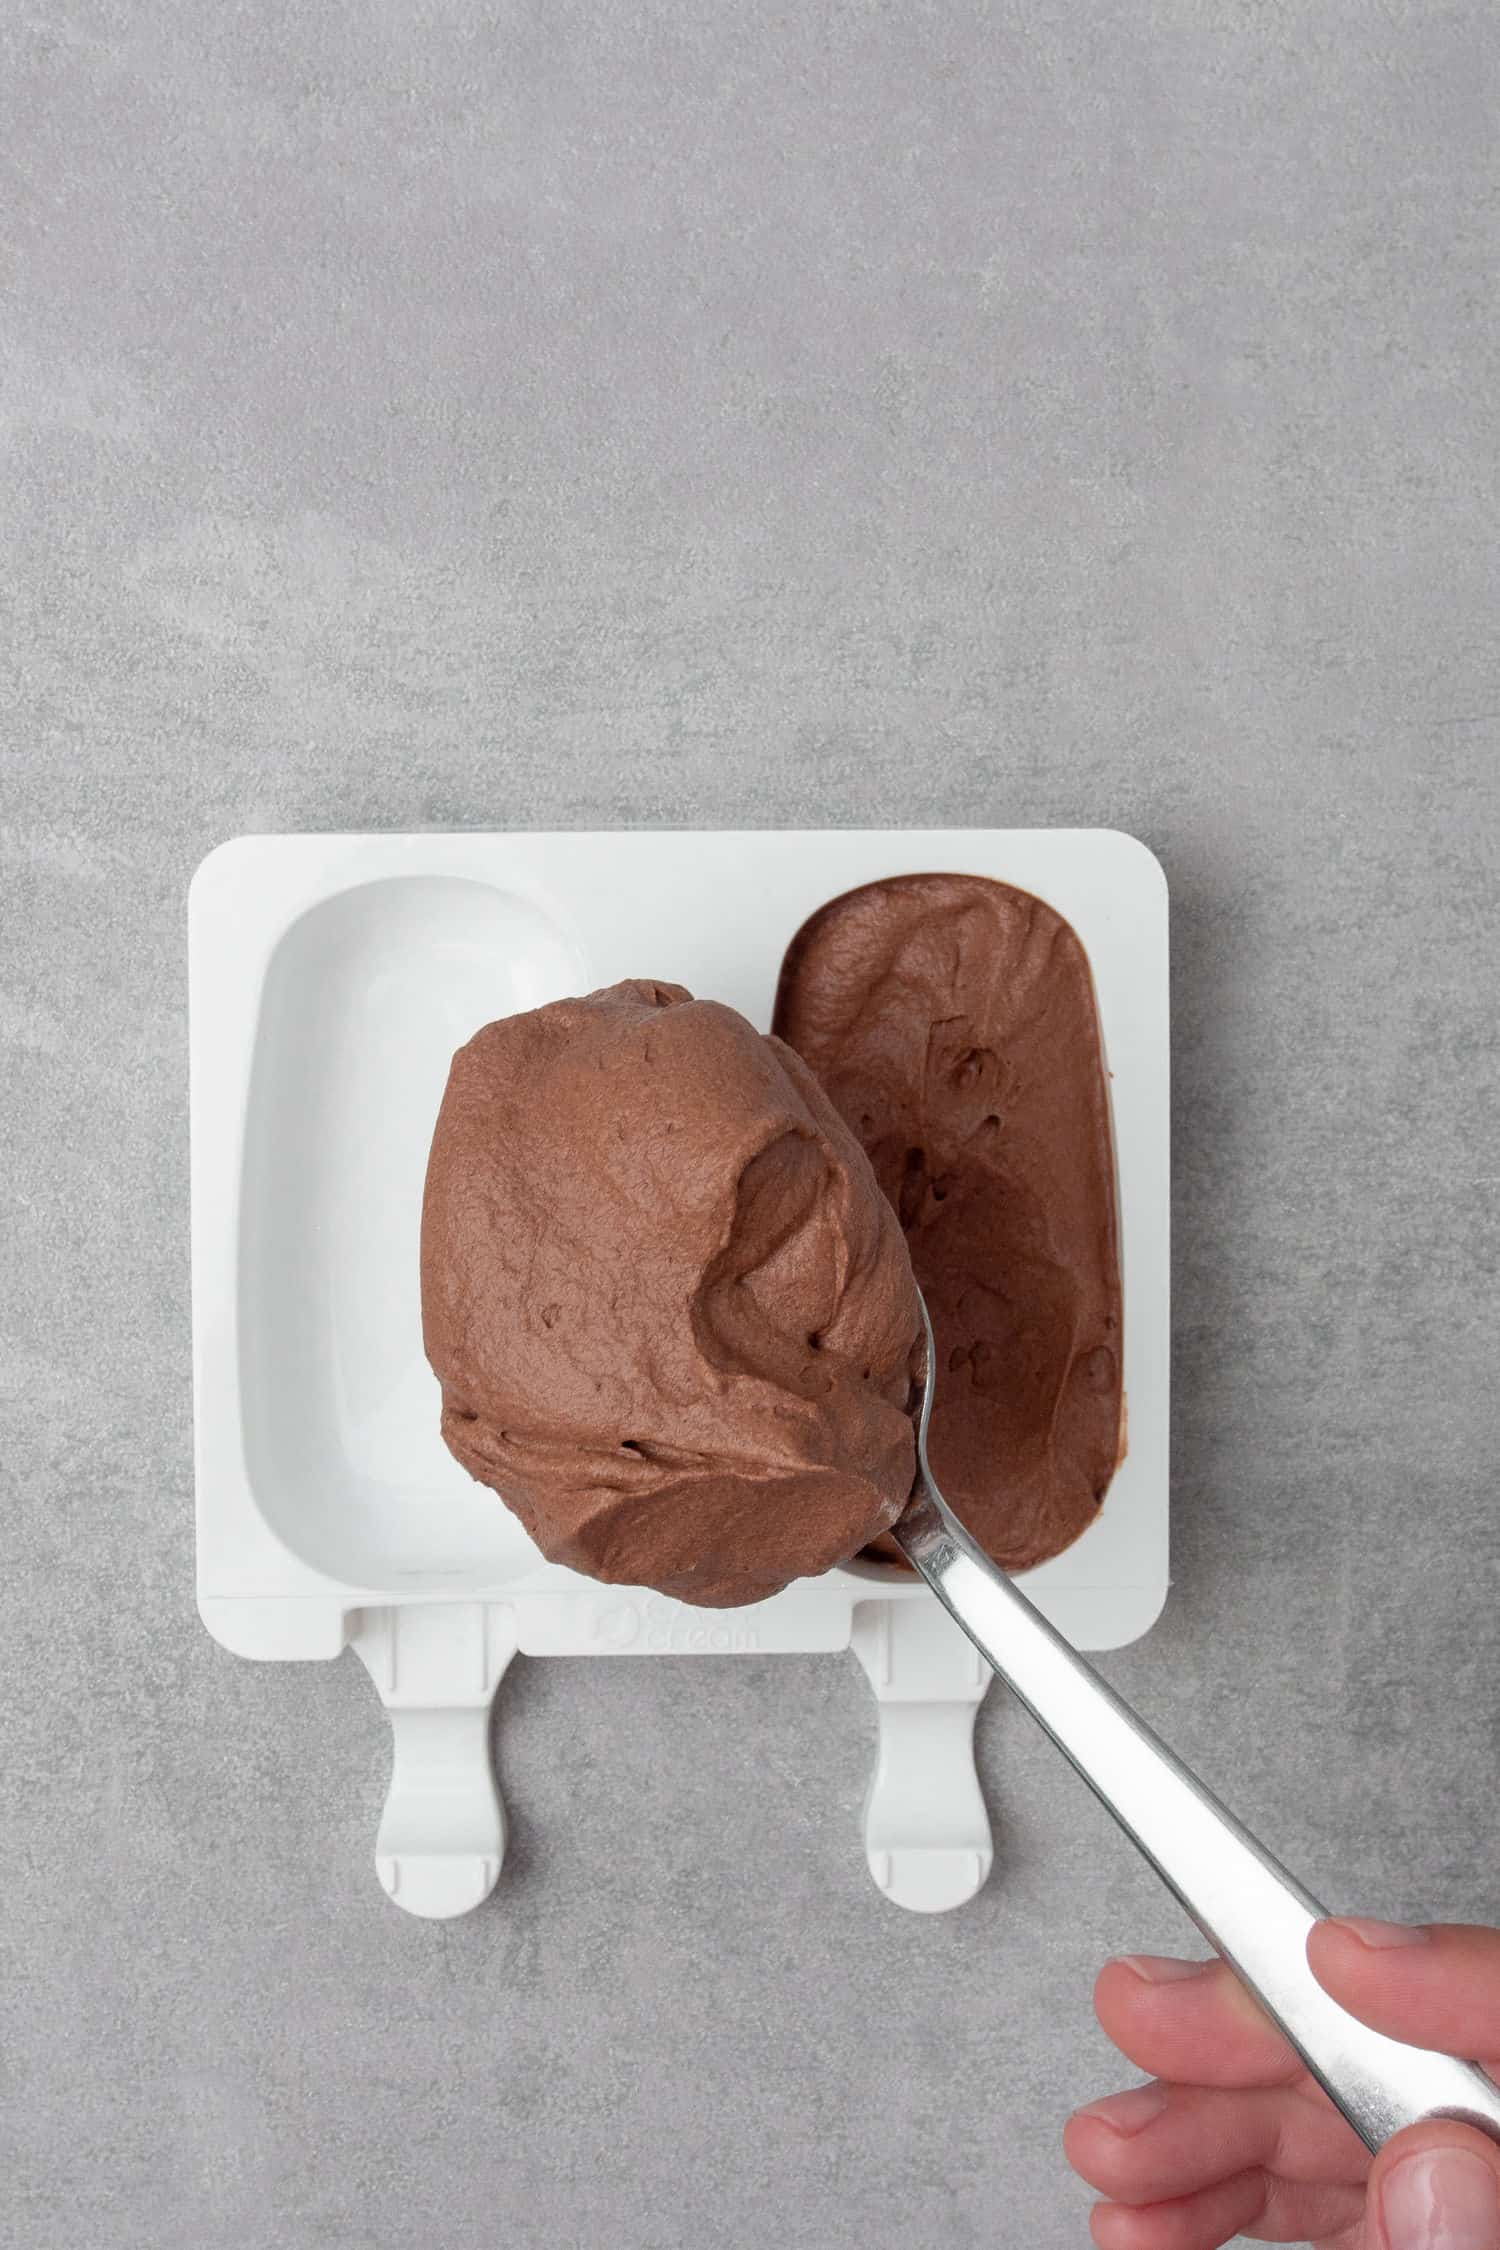 Chocolate ice cream bar process